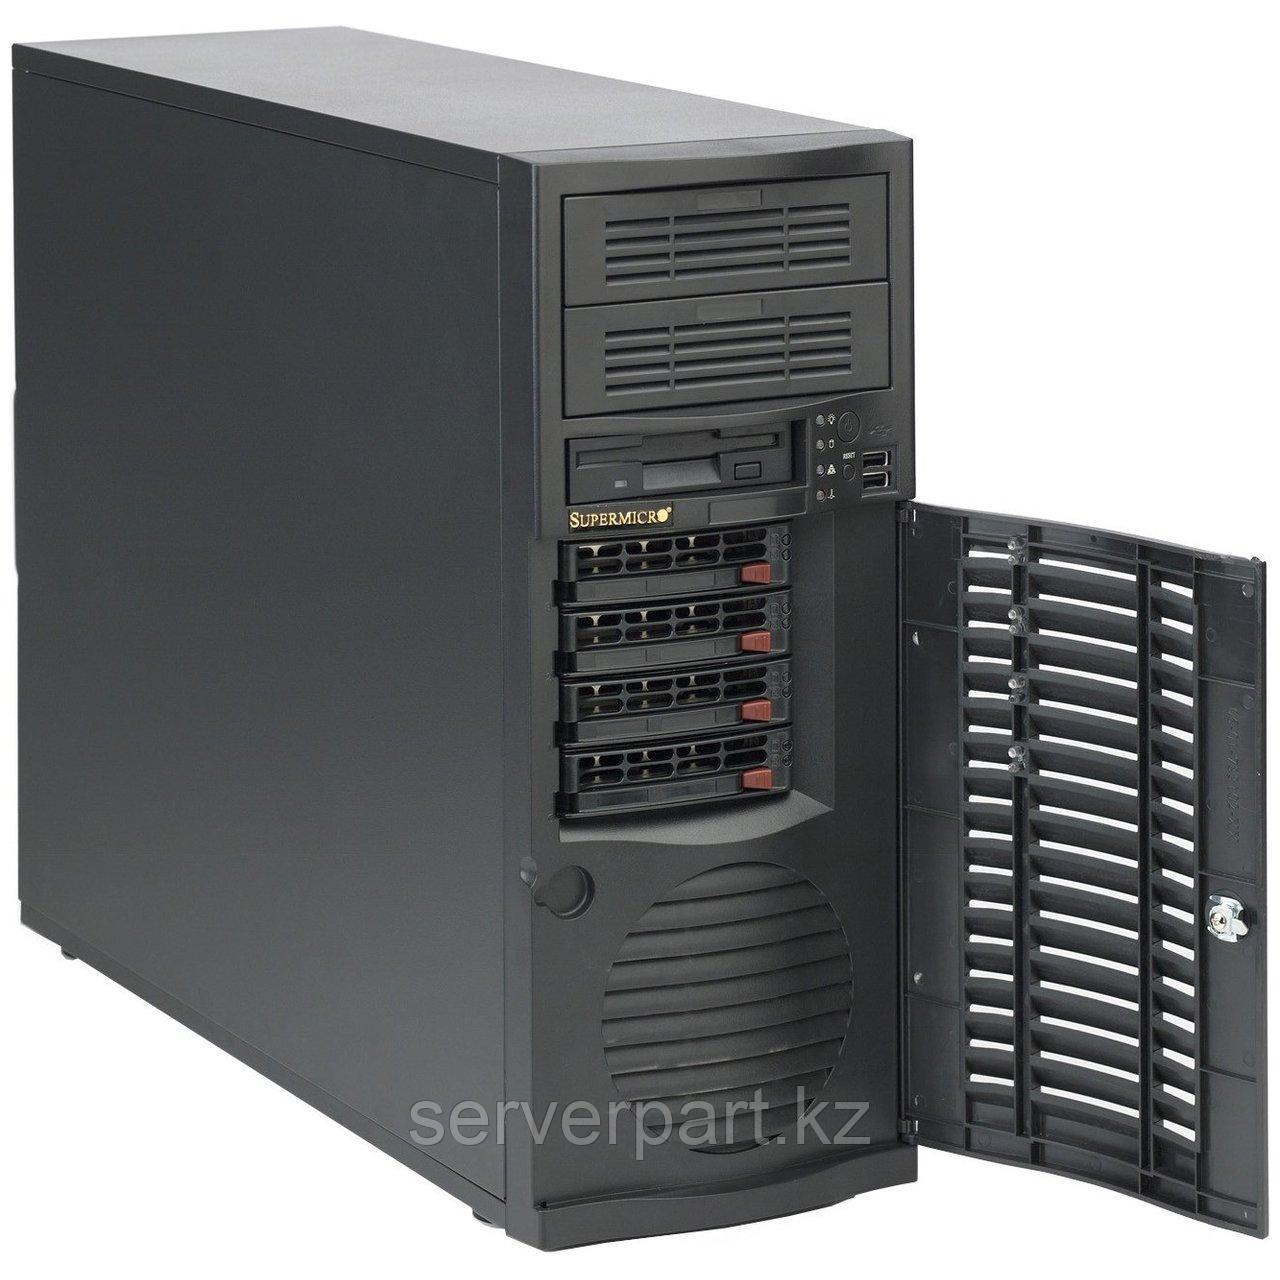 Сервер Supermicro 733T-500B\X11DPH-i Tower 4LFF/1x8-core intel Xeon 3204 SC-B 1.9GHz/no RAM/no HDD